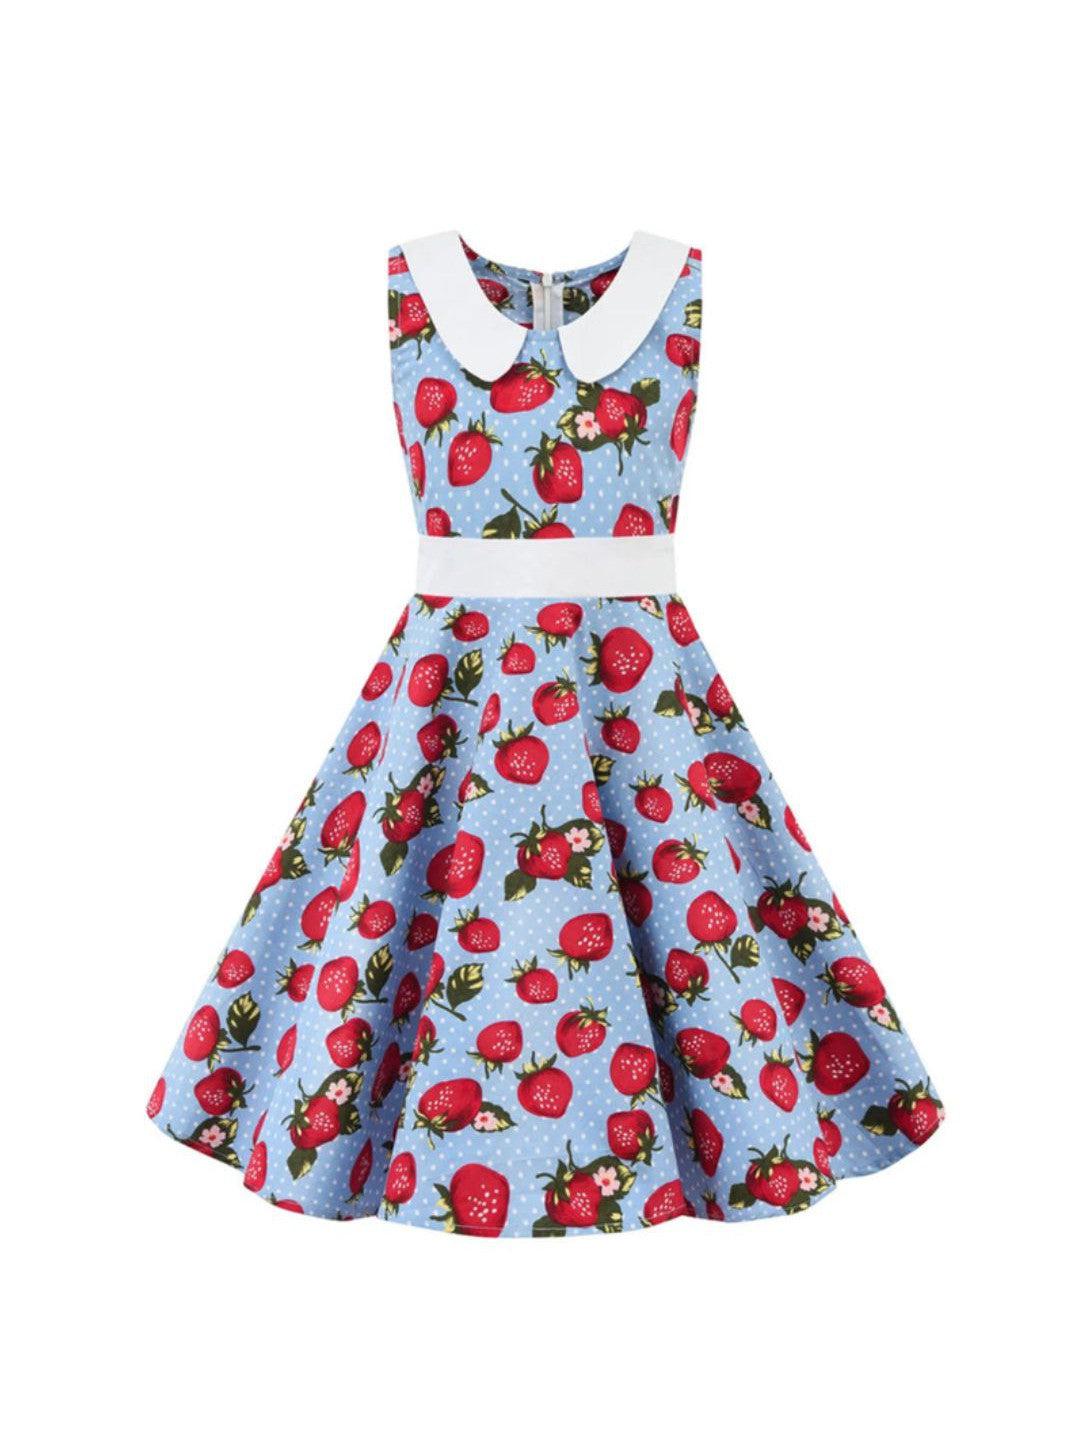 Girls Strawberry Polka Dot Blue Rockabilly Dress